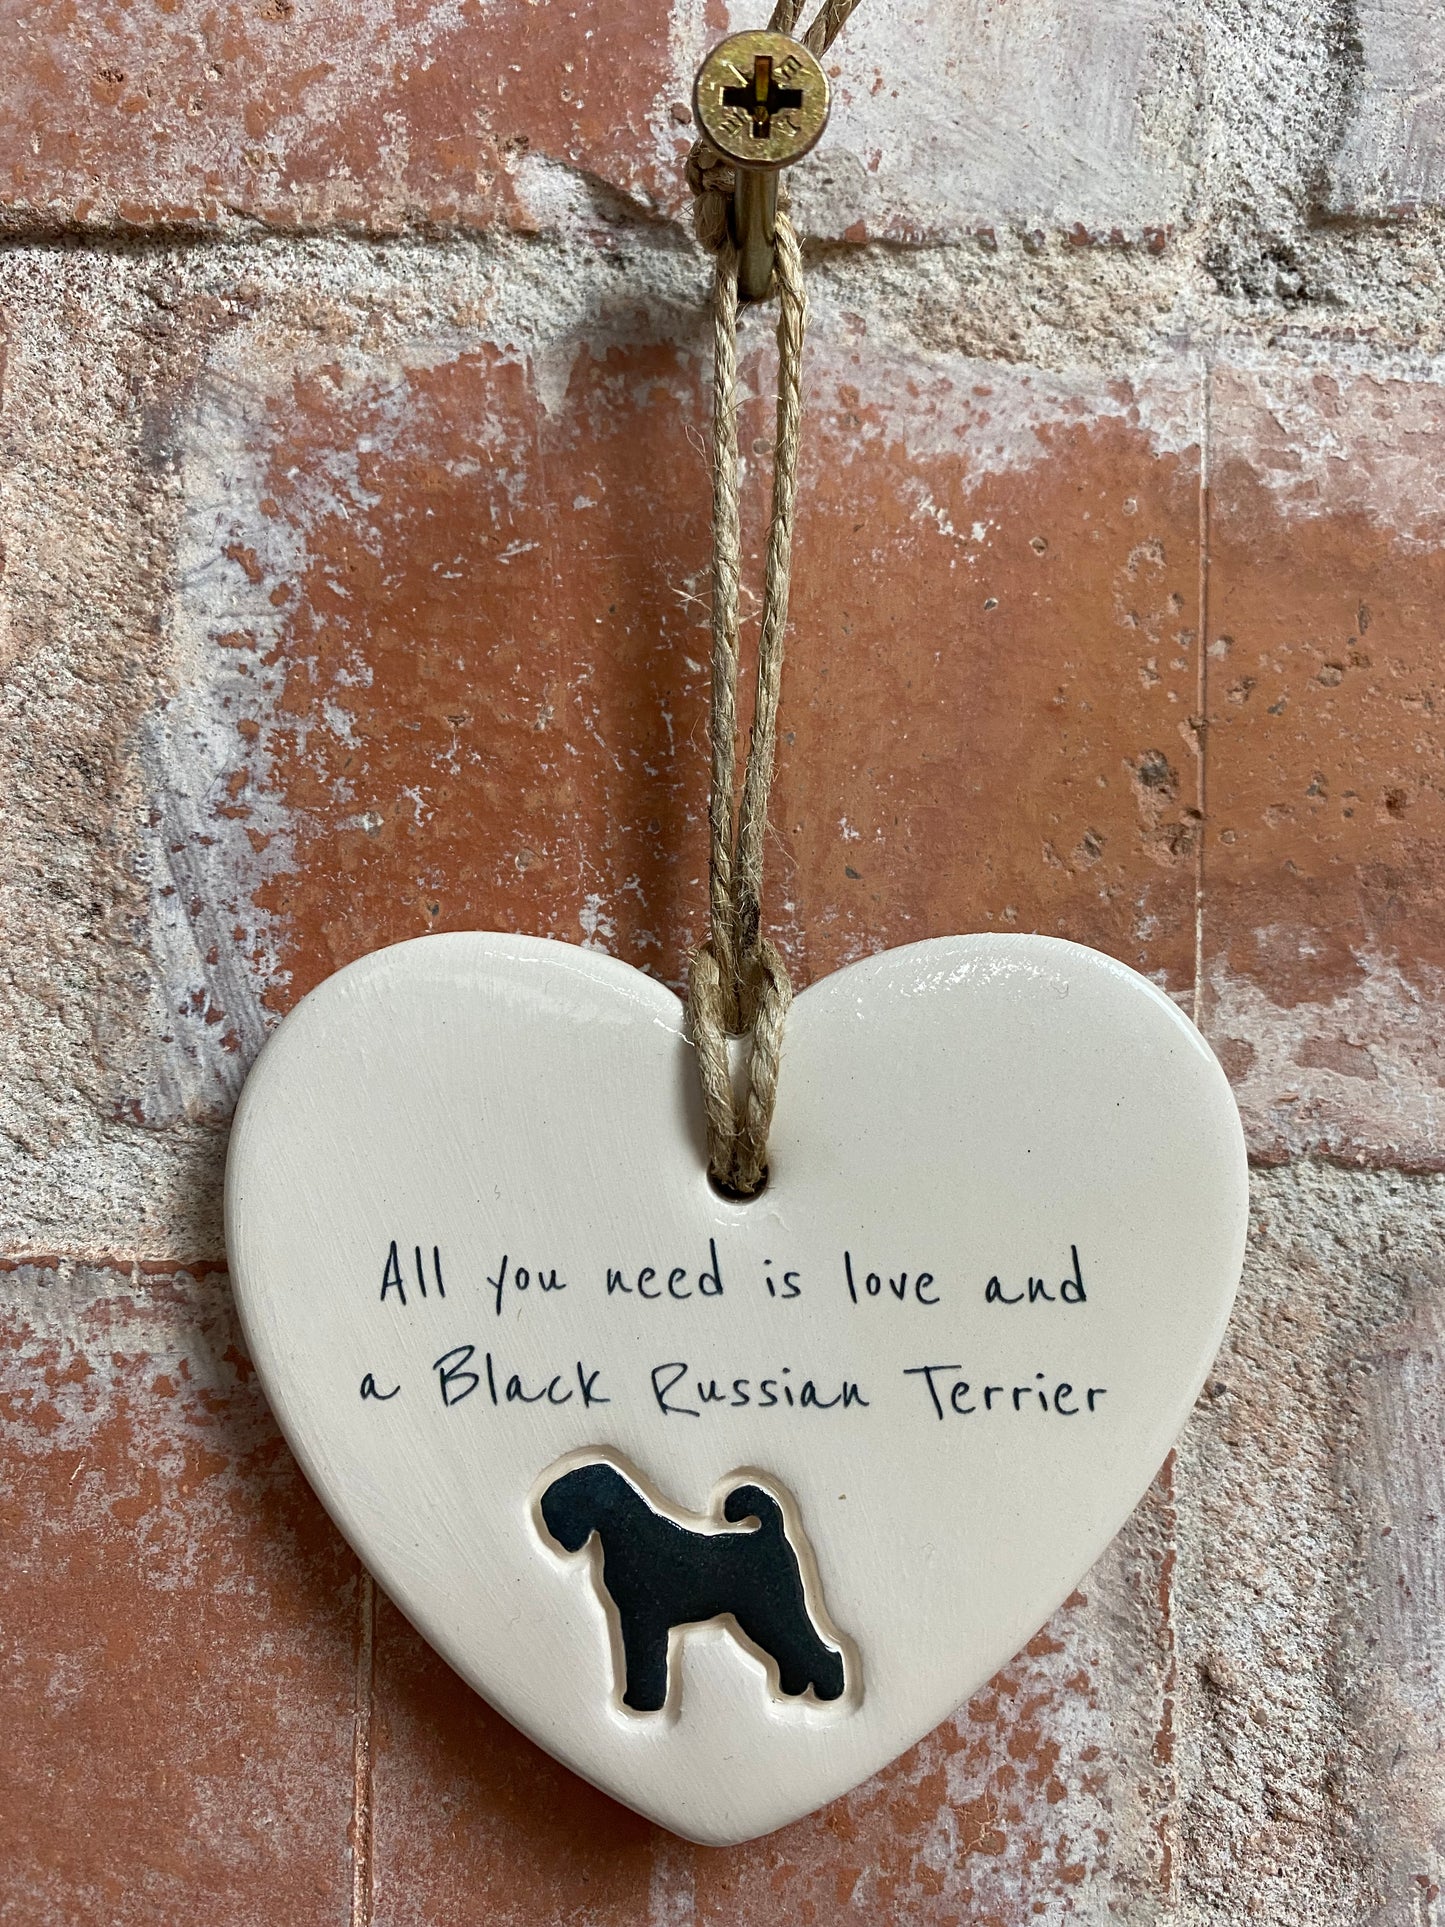 Black Russian Terrier ceramic heart